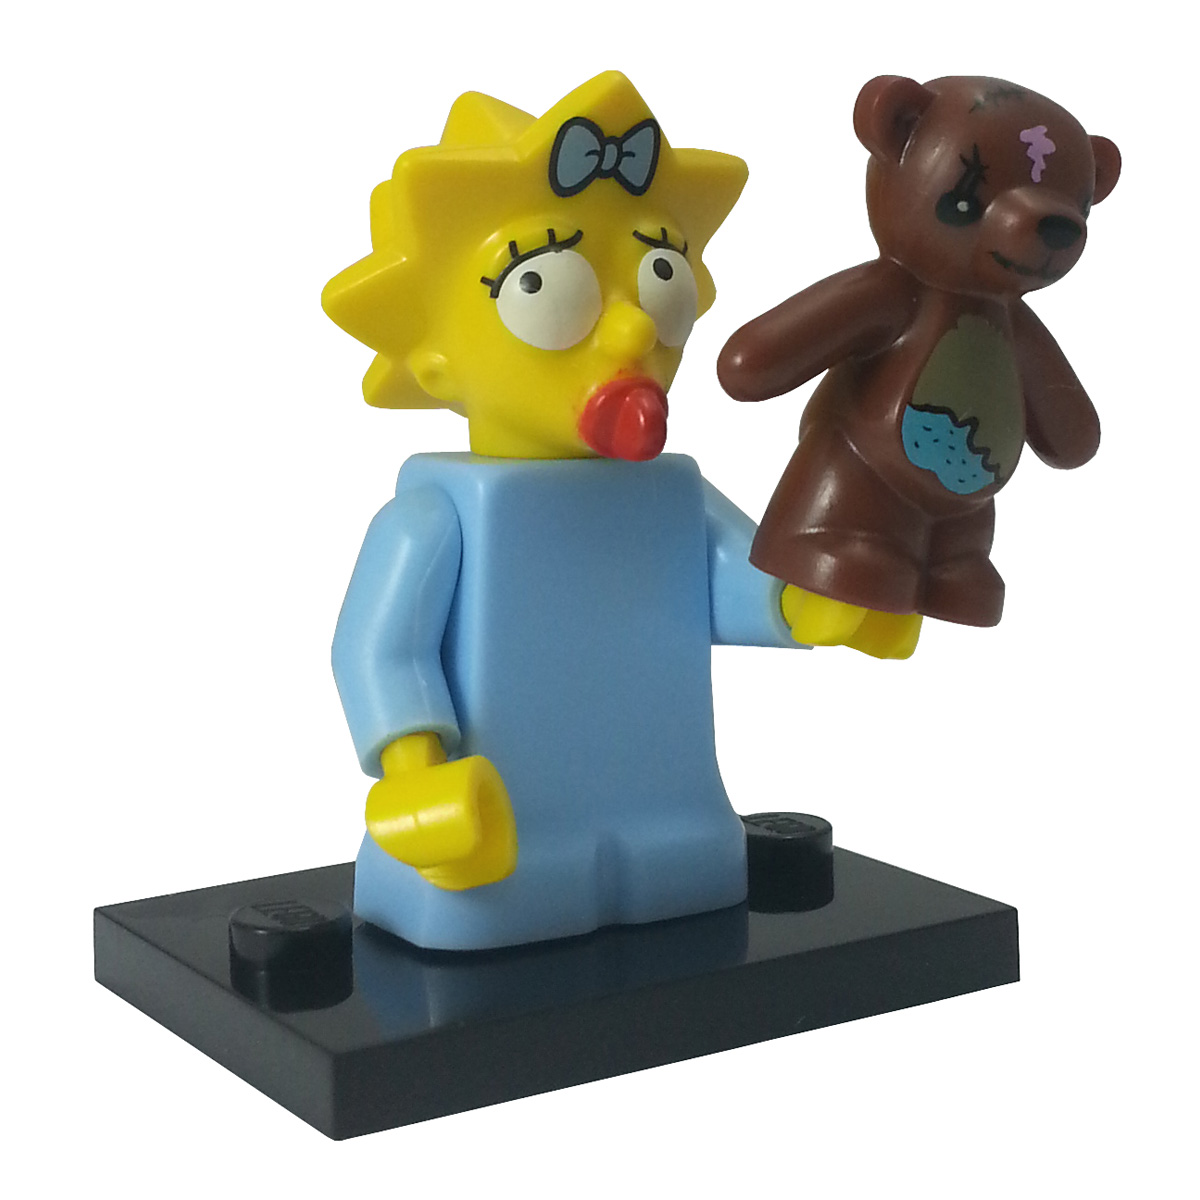 Bausteine Online - Lego 71005 Minifigures Series The Simpsons Figure No ...